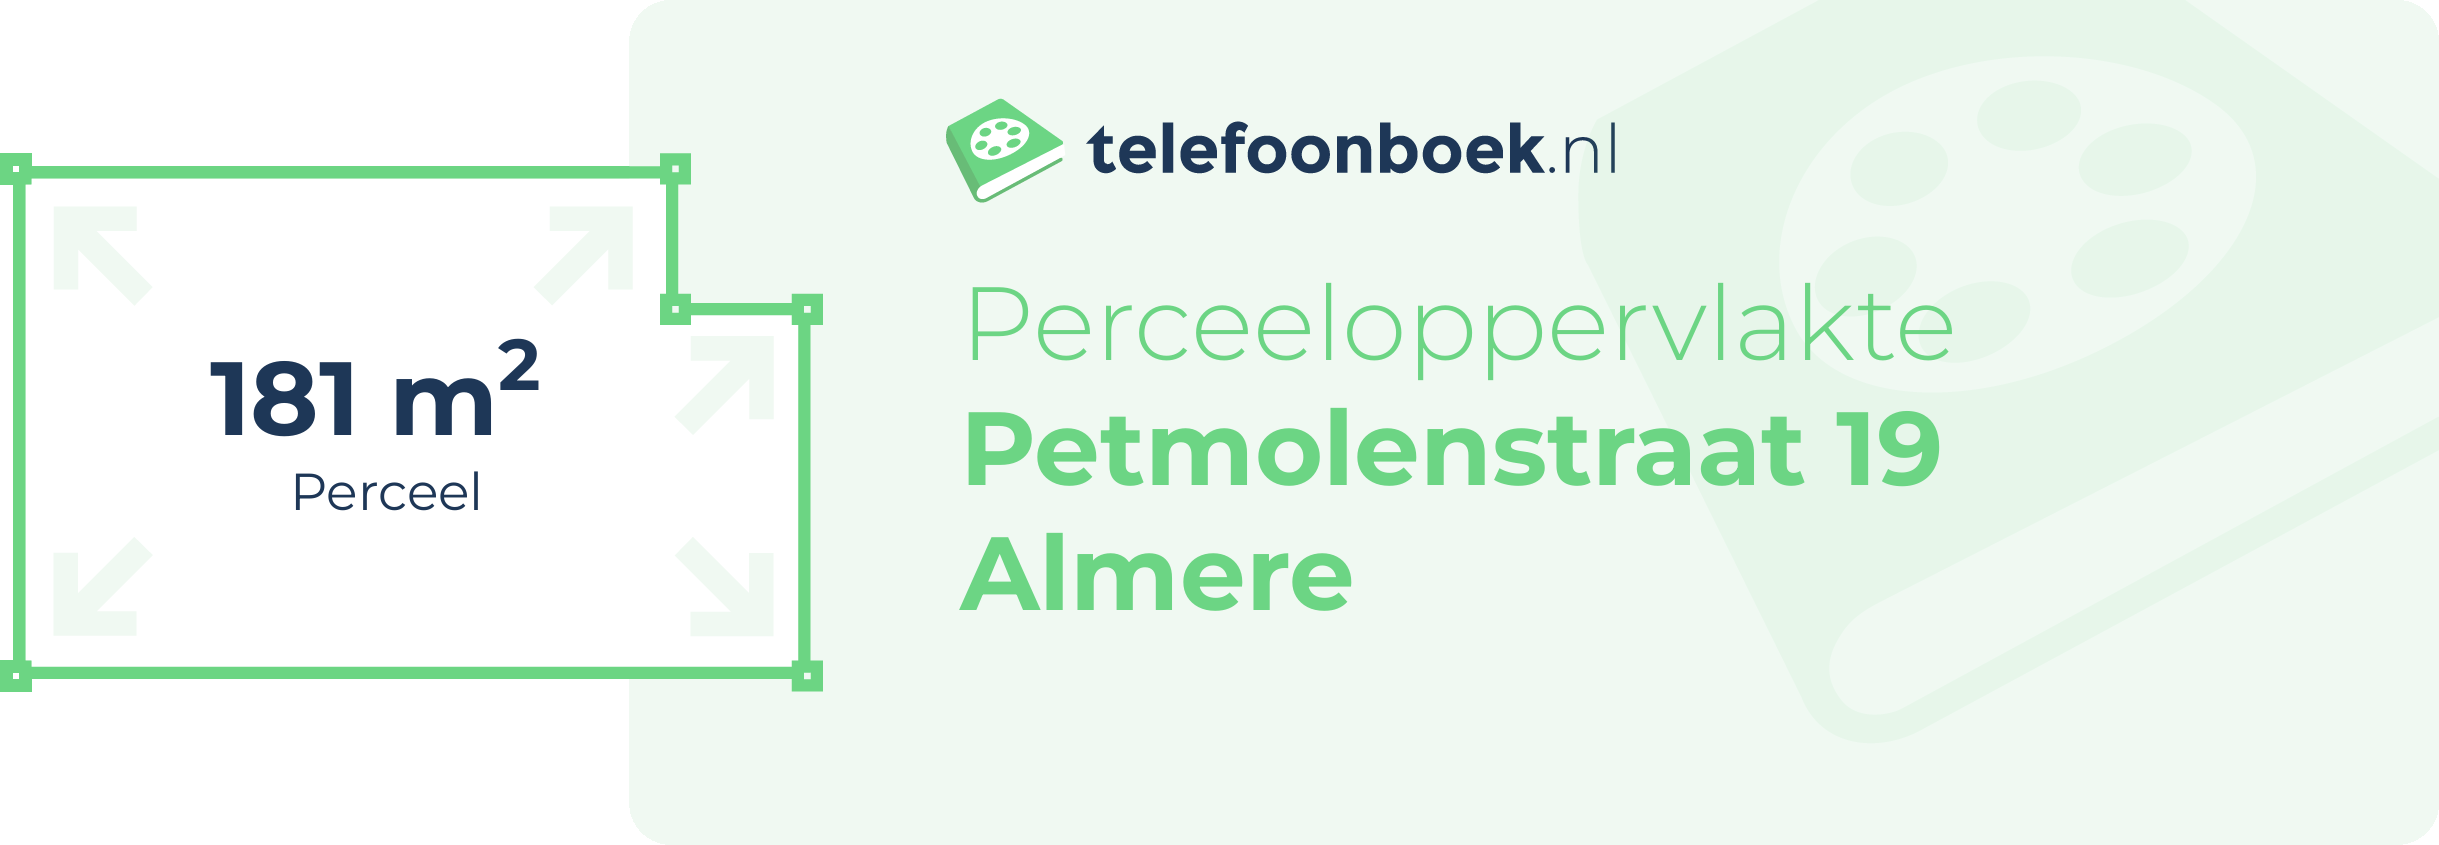 Perceeloppervlakte Petmolenstraat 19 Almere